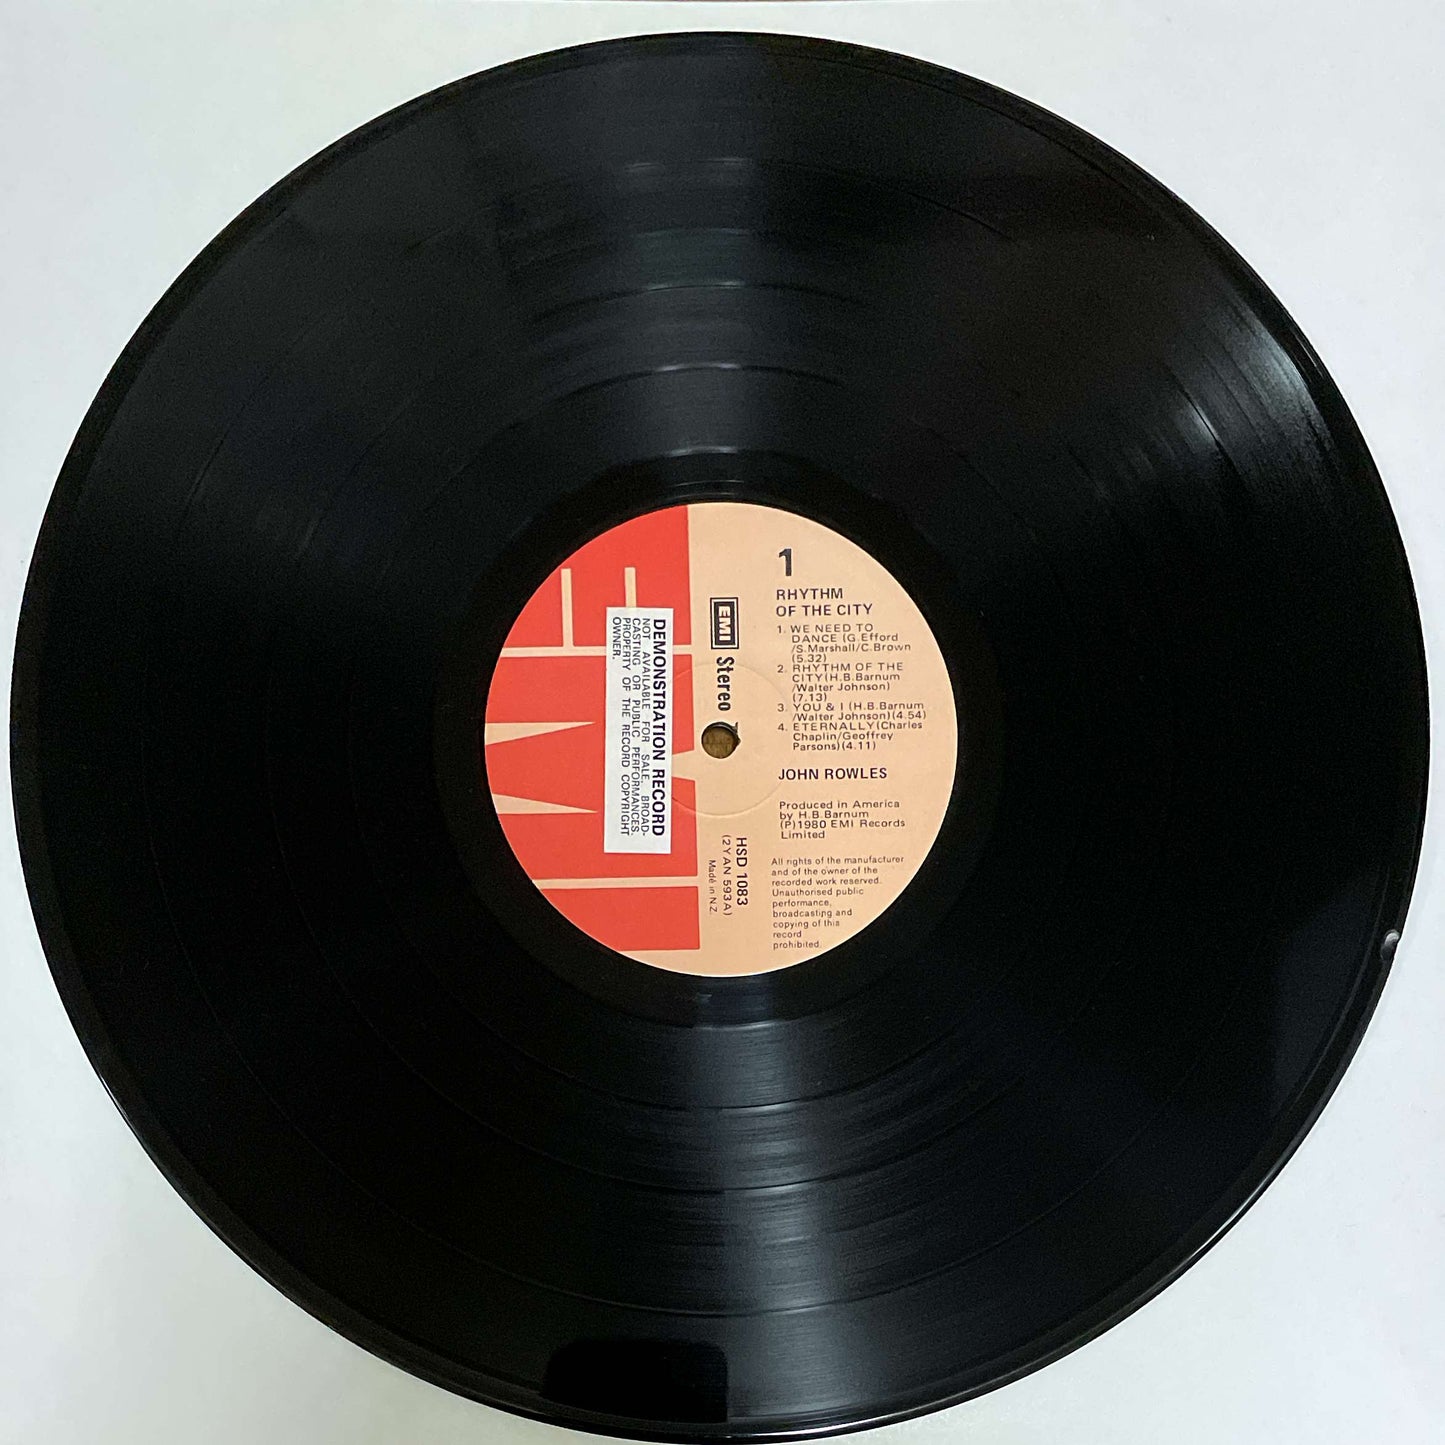 John Rowles ‎– Rhythm Of The City ( EMI ) LP